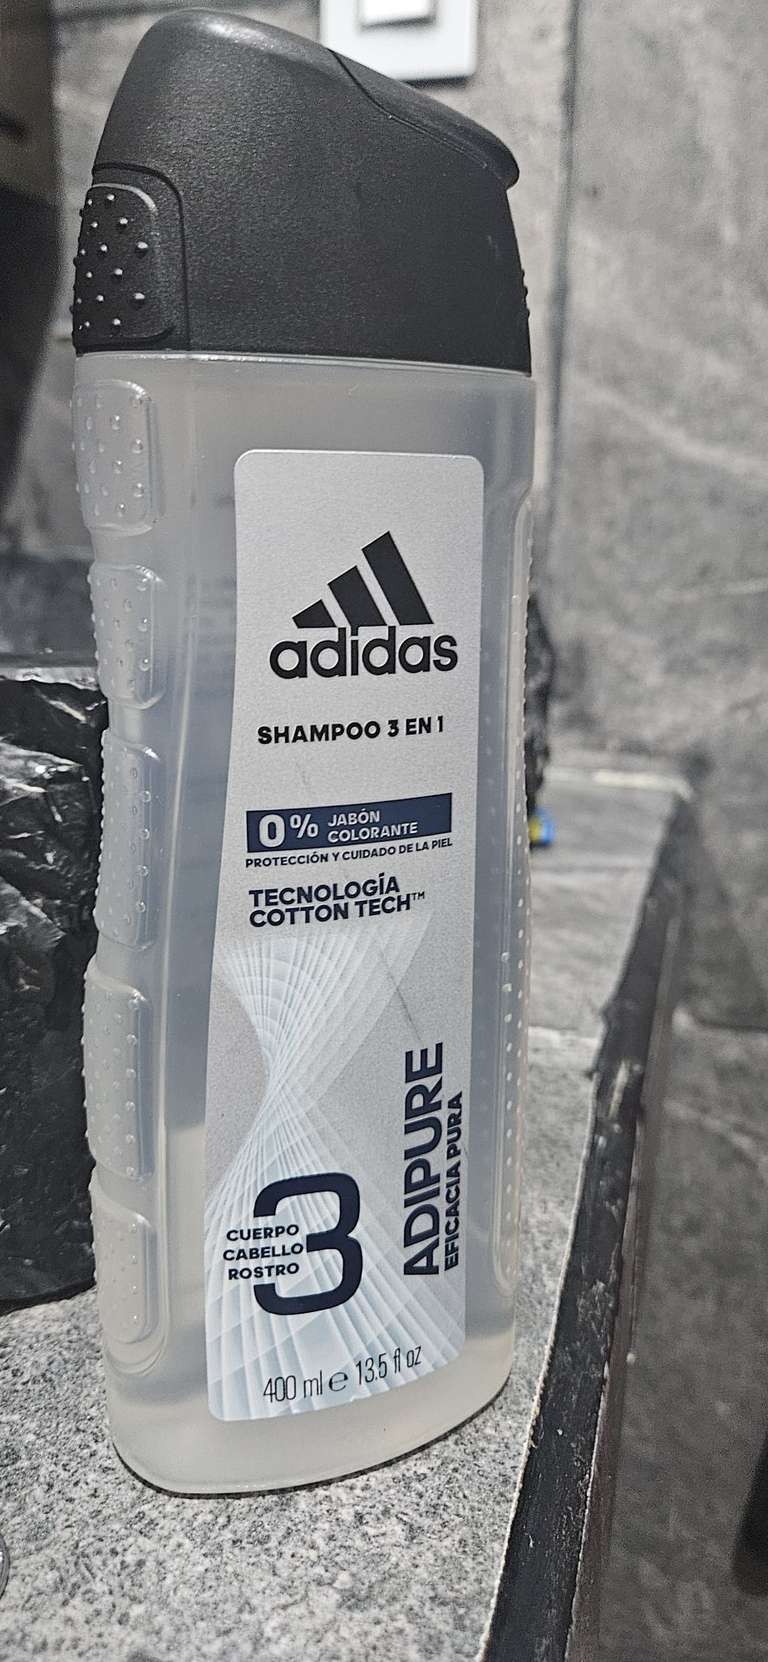 Adidas shampoo 3en1 adipure en Farmacias Guadalajara